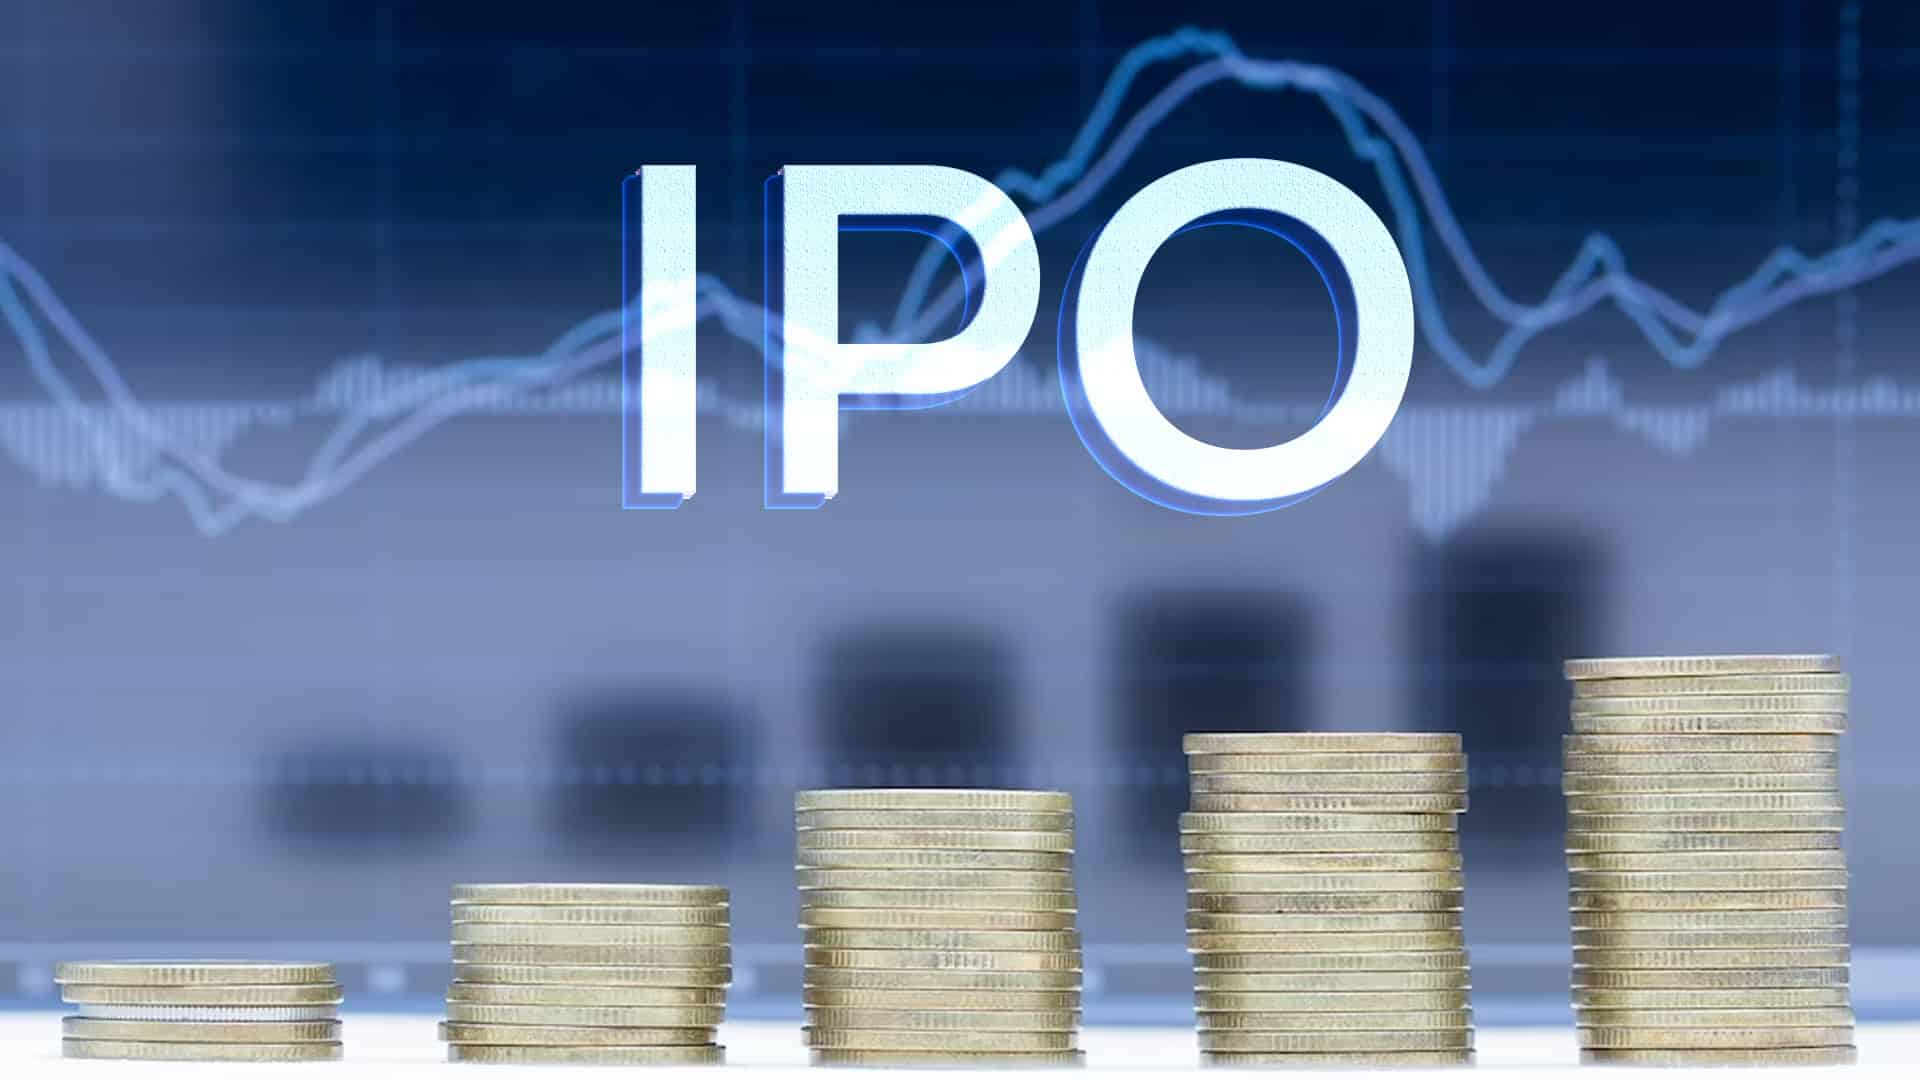 Senco IPO price band at Rs 301-317 per share